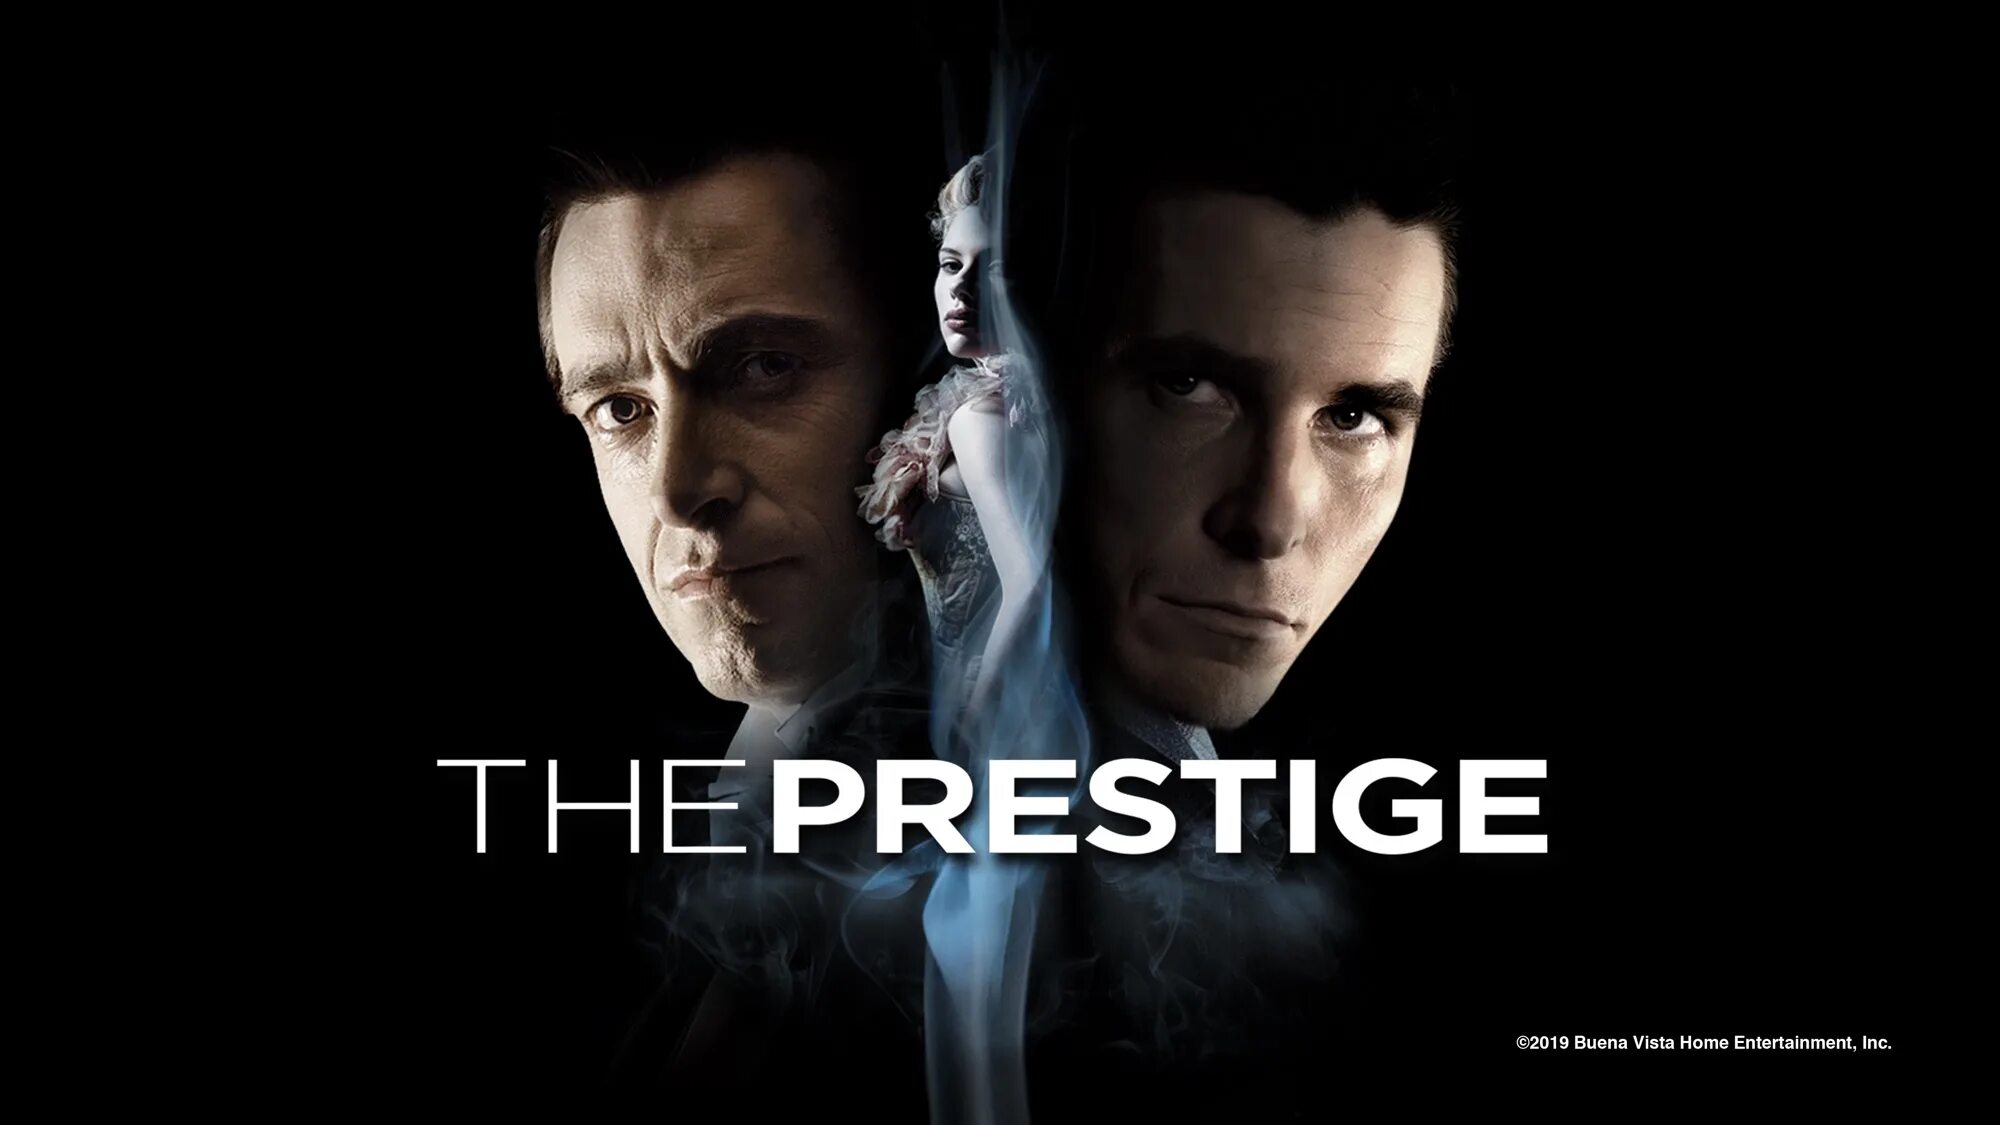 The Prestige 2006. Кристиан Бейл Престиж. Престиж (2007) (the Prestige). Престиж Кристофер Нолан. Престиж дата выхода всех серий